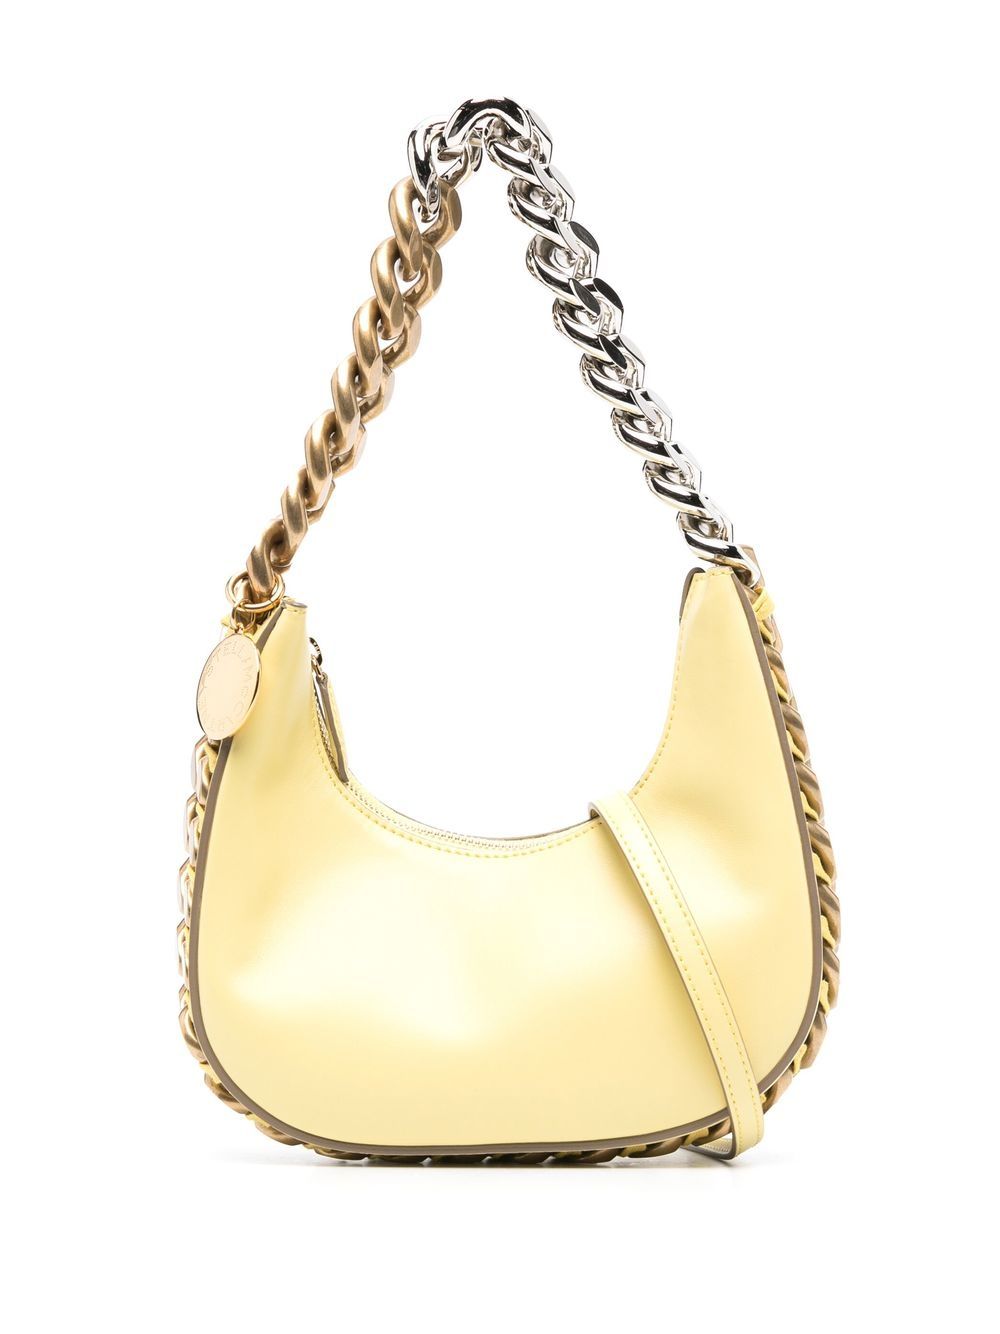 Stella McCartney Frayme chain-link shoulder bag - Yellow